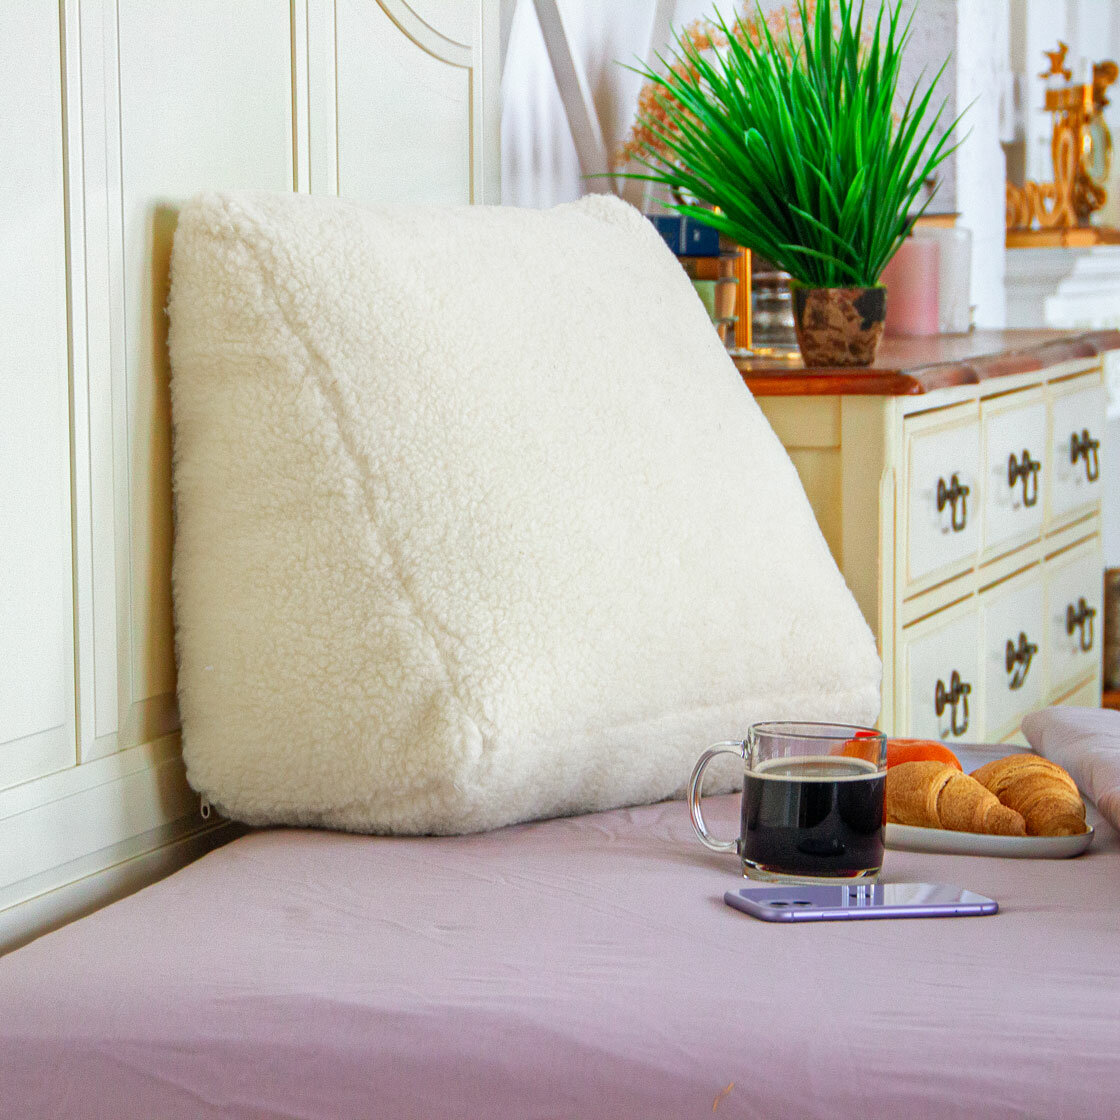 Треугольная клиновидная подушка для спины для кровати дивана PillowPlace чехол шерсть 100% 50х20х40 см